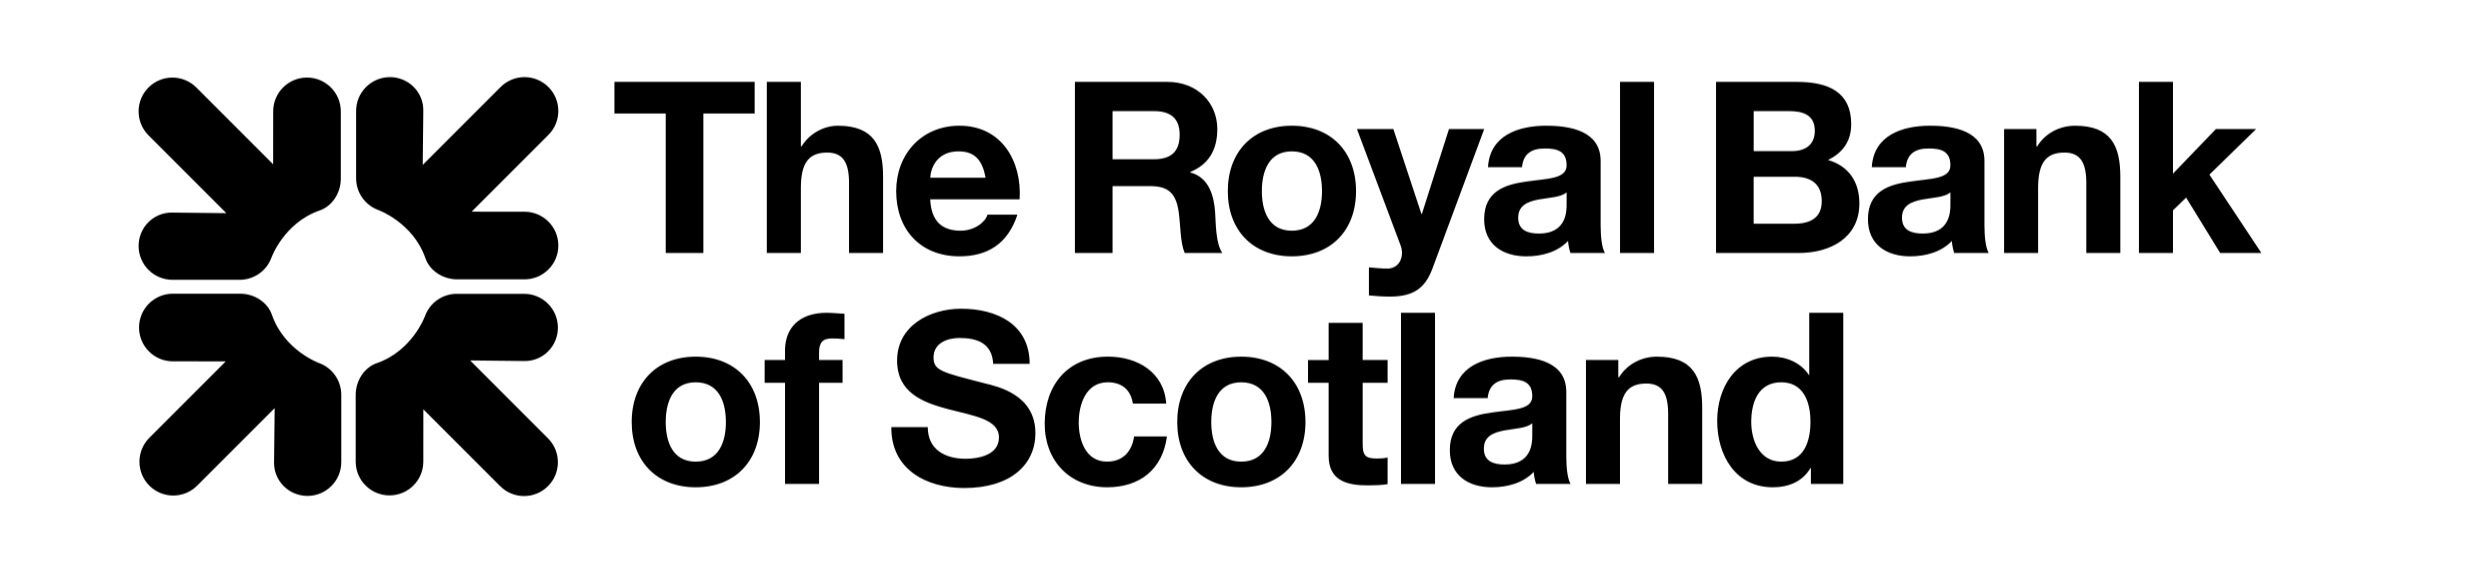 the-royal-bank-of-scotland-2-logo-black-and-white.jpg